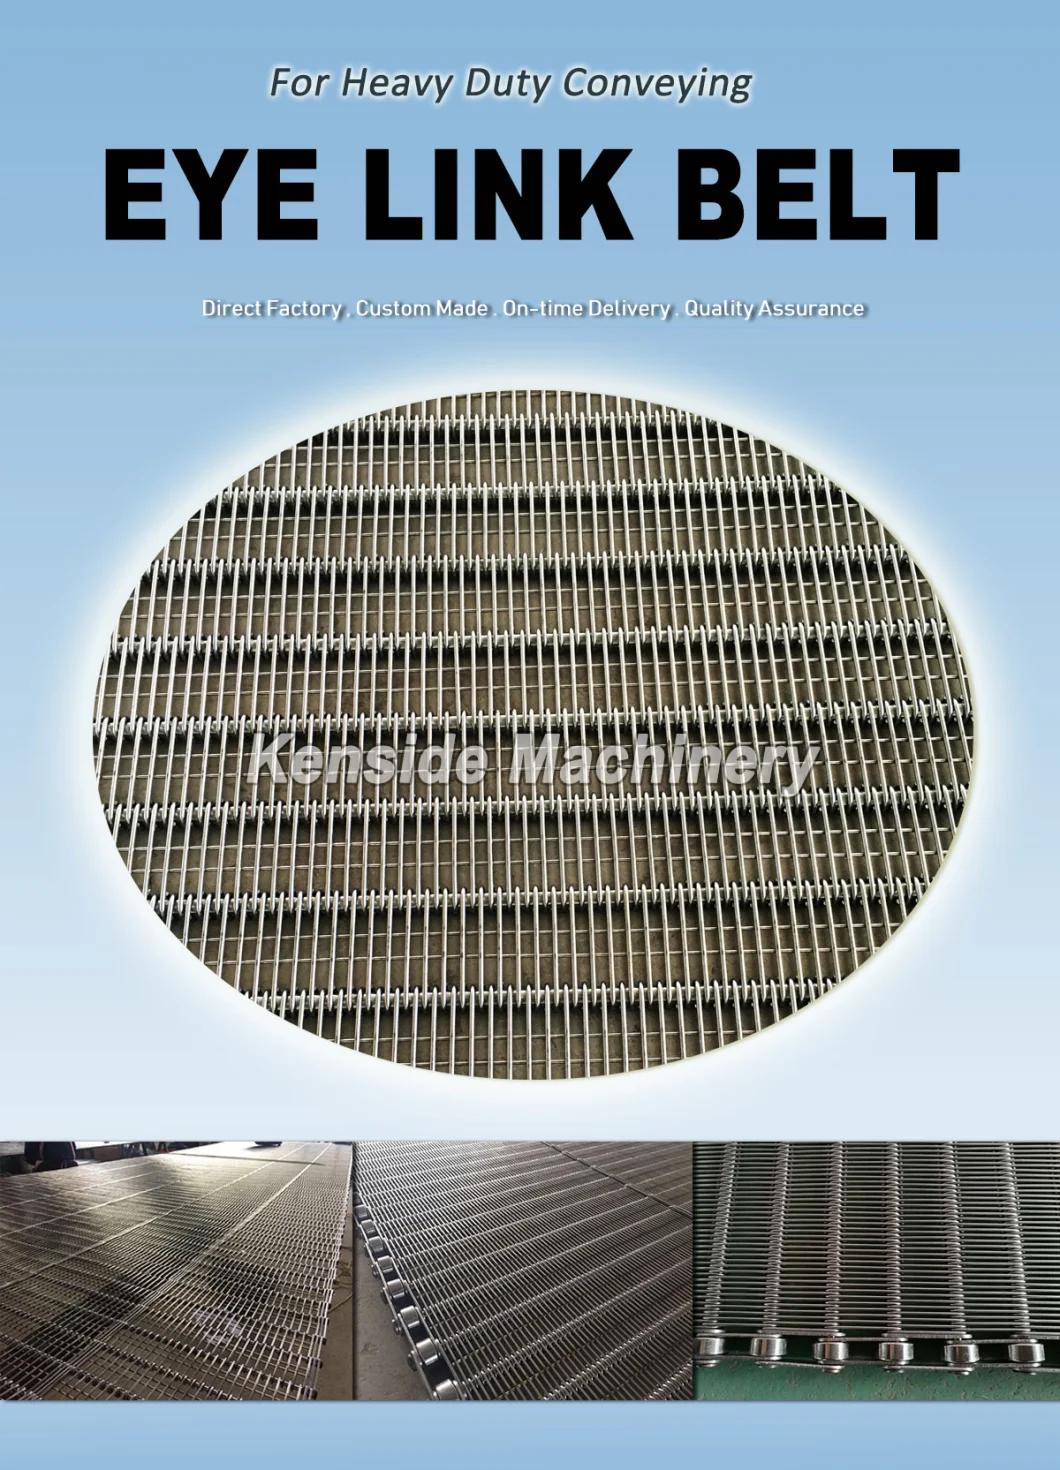 Stainless Steel Eye Link Belt for Pharmaceutical Industries